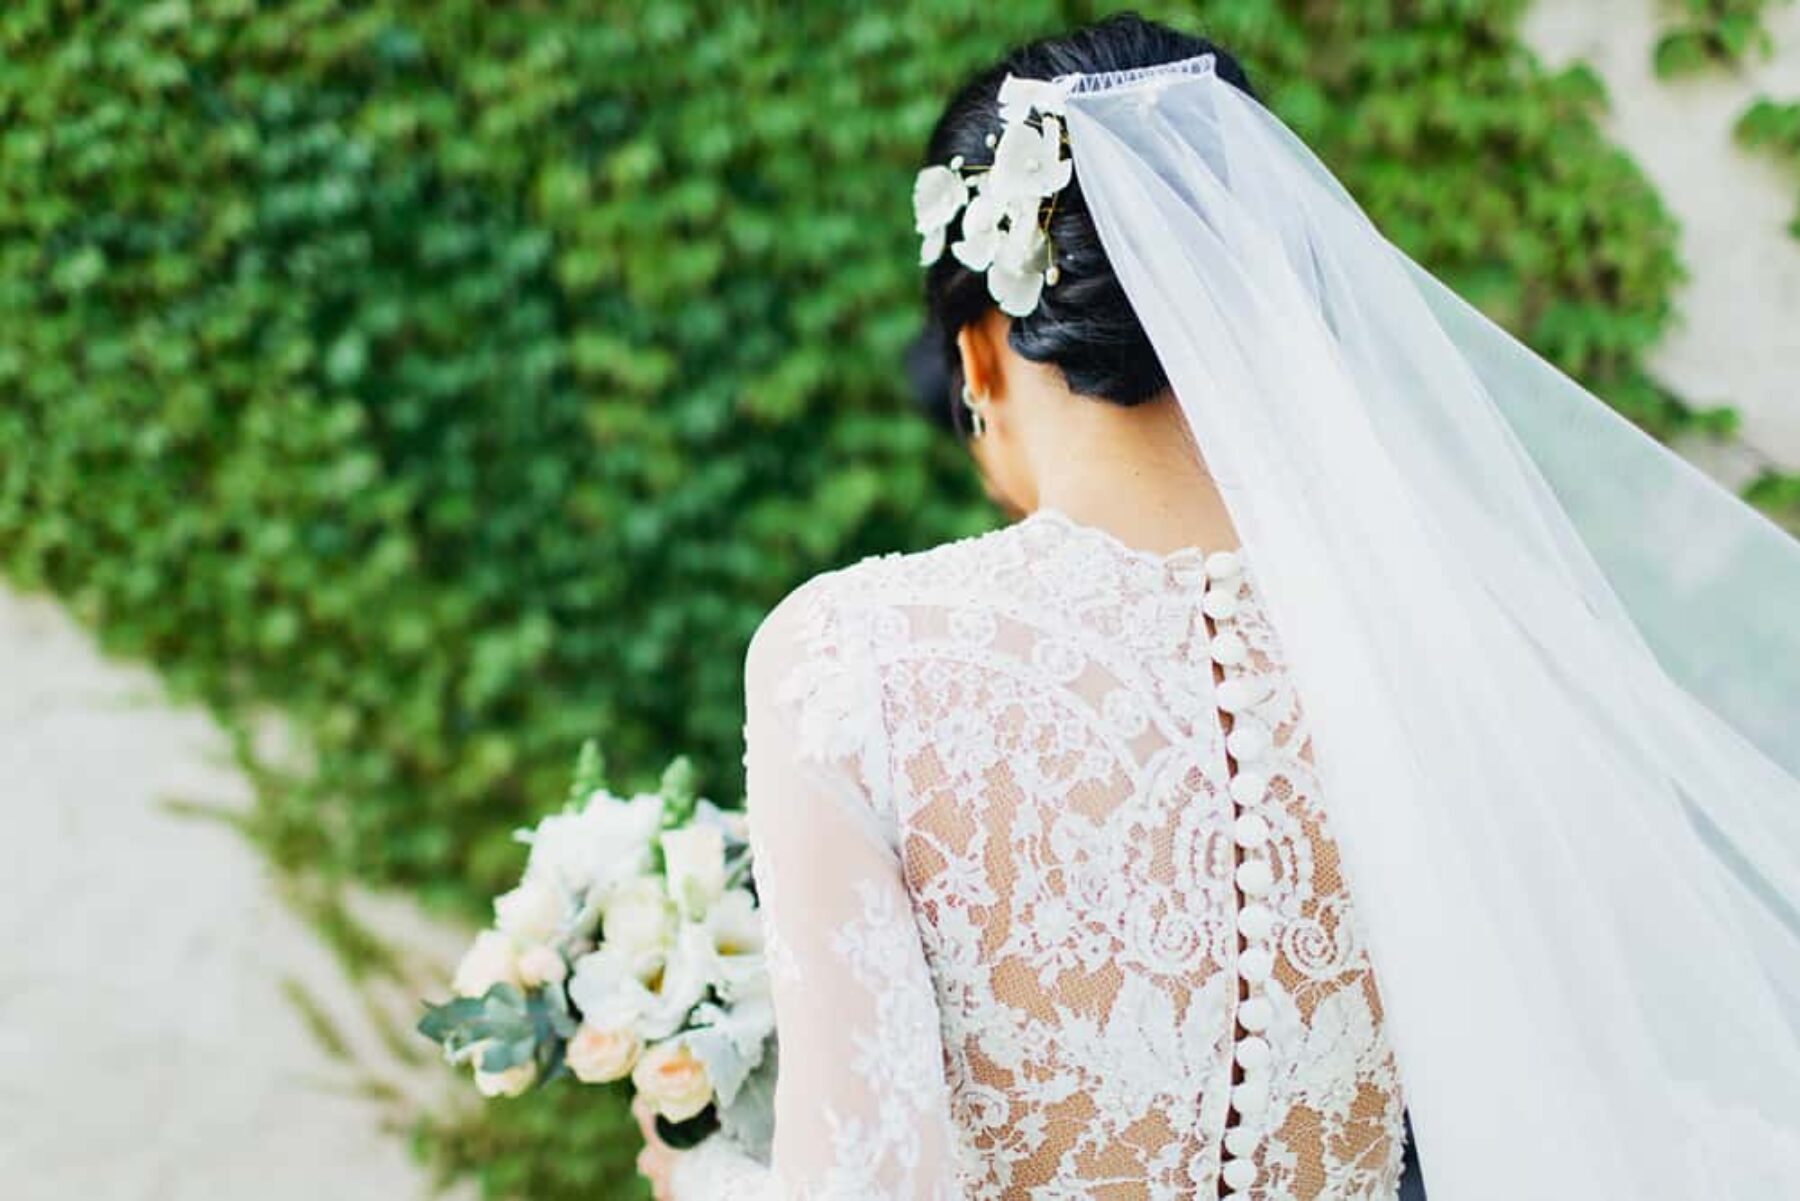 Yaki Ravid wedding dress